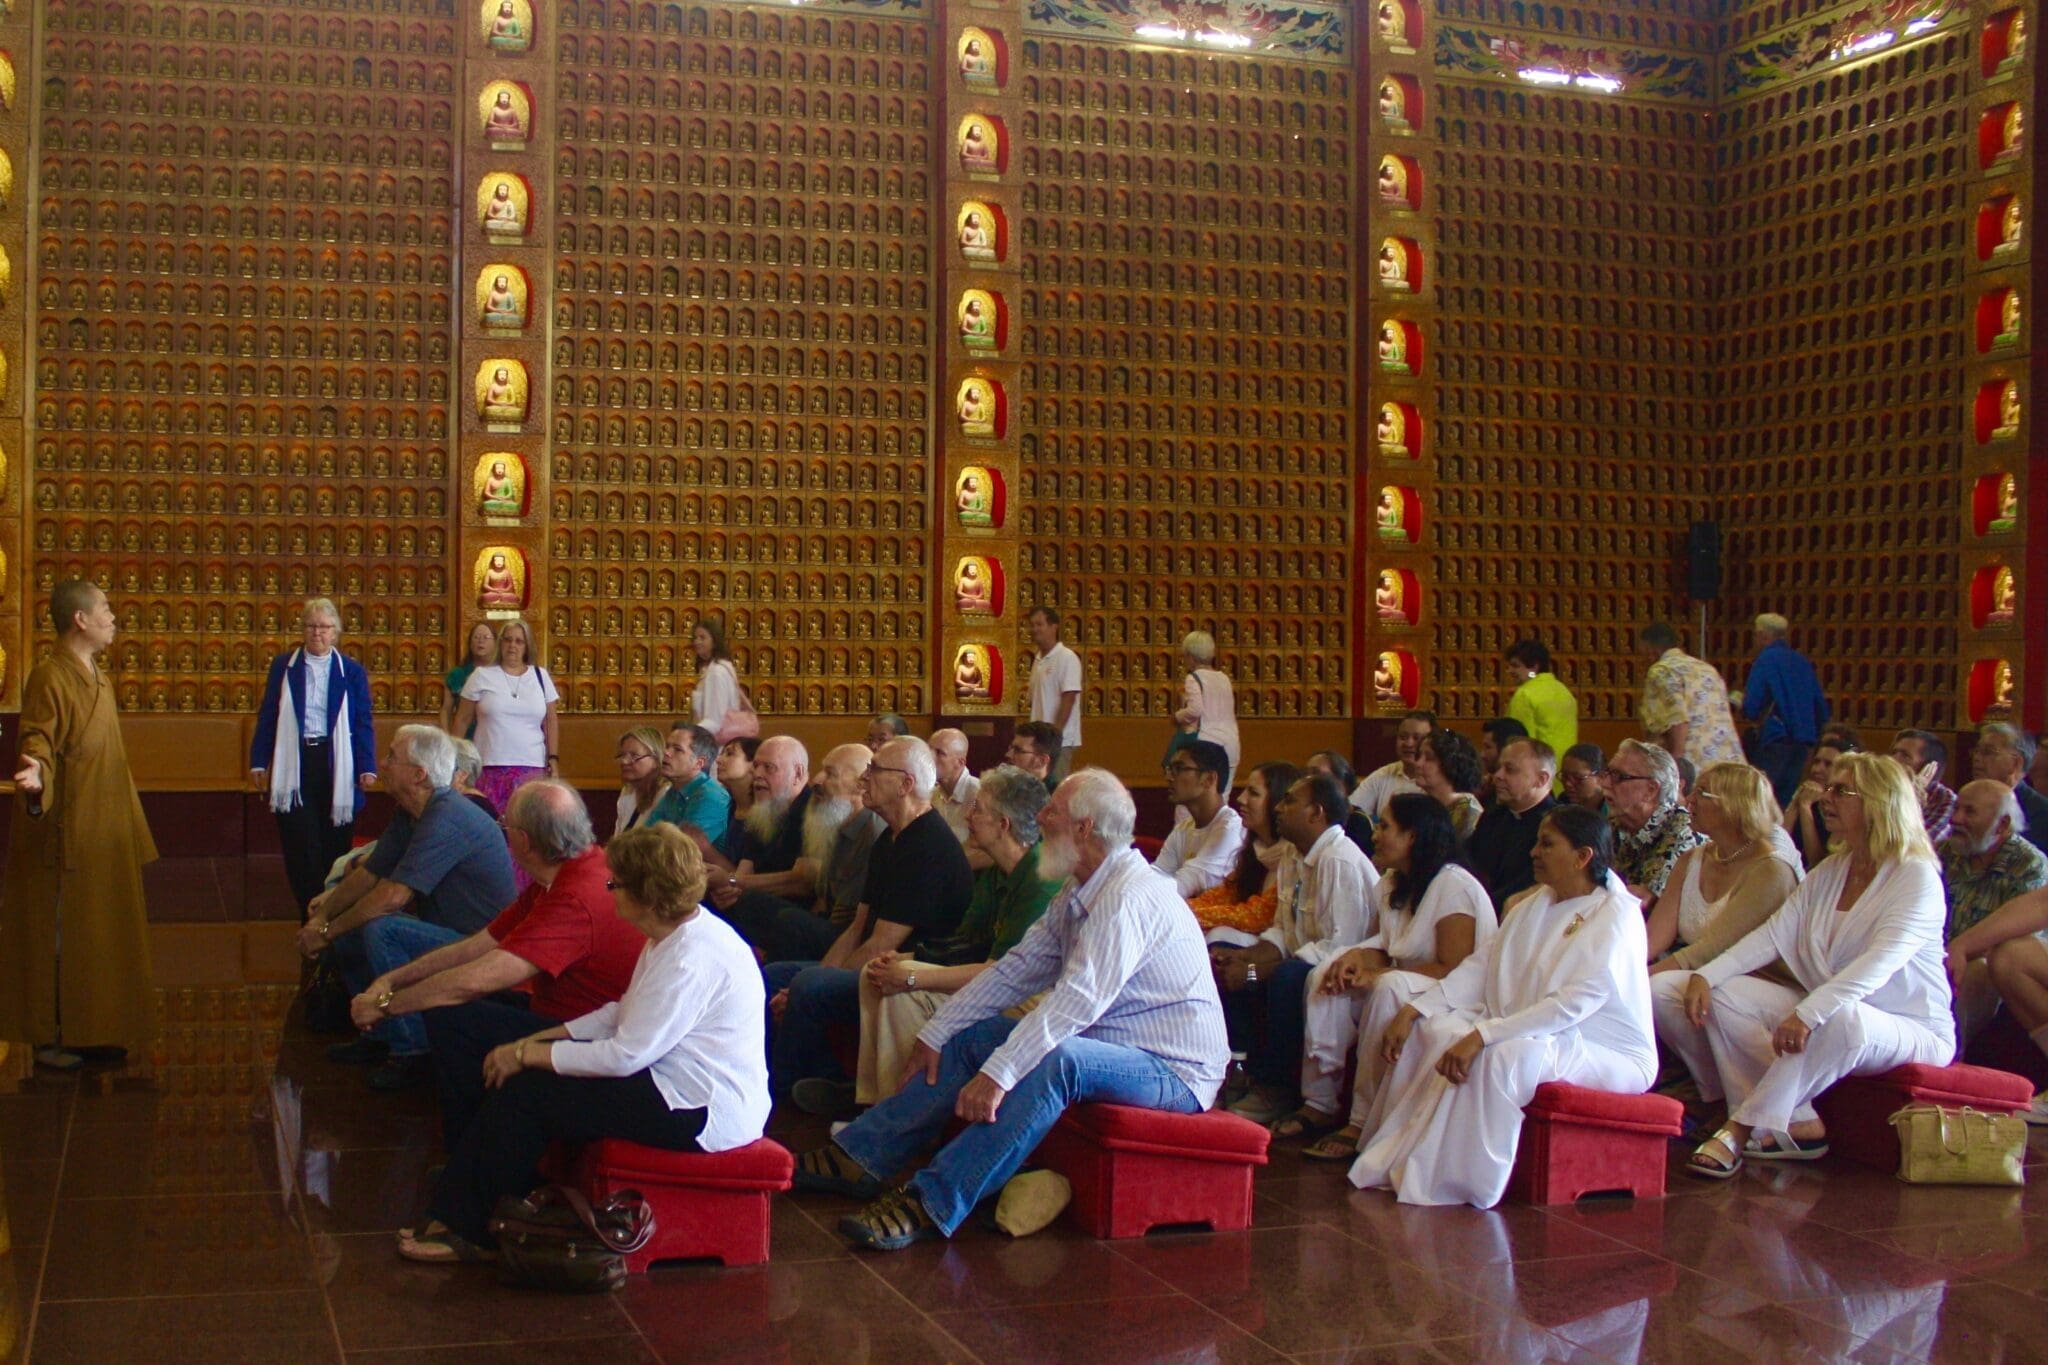 Buddhist Rituals in the Main Hall